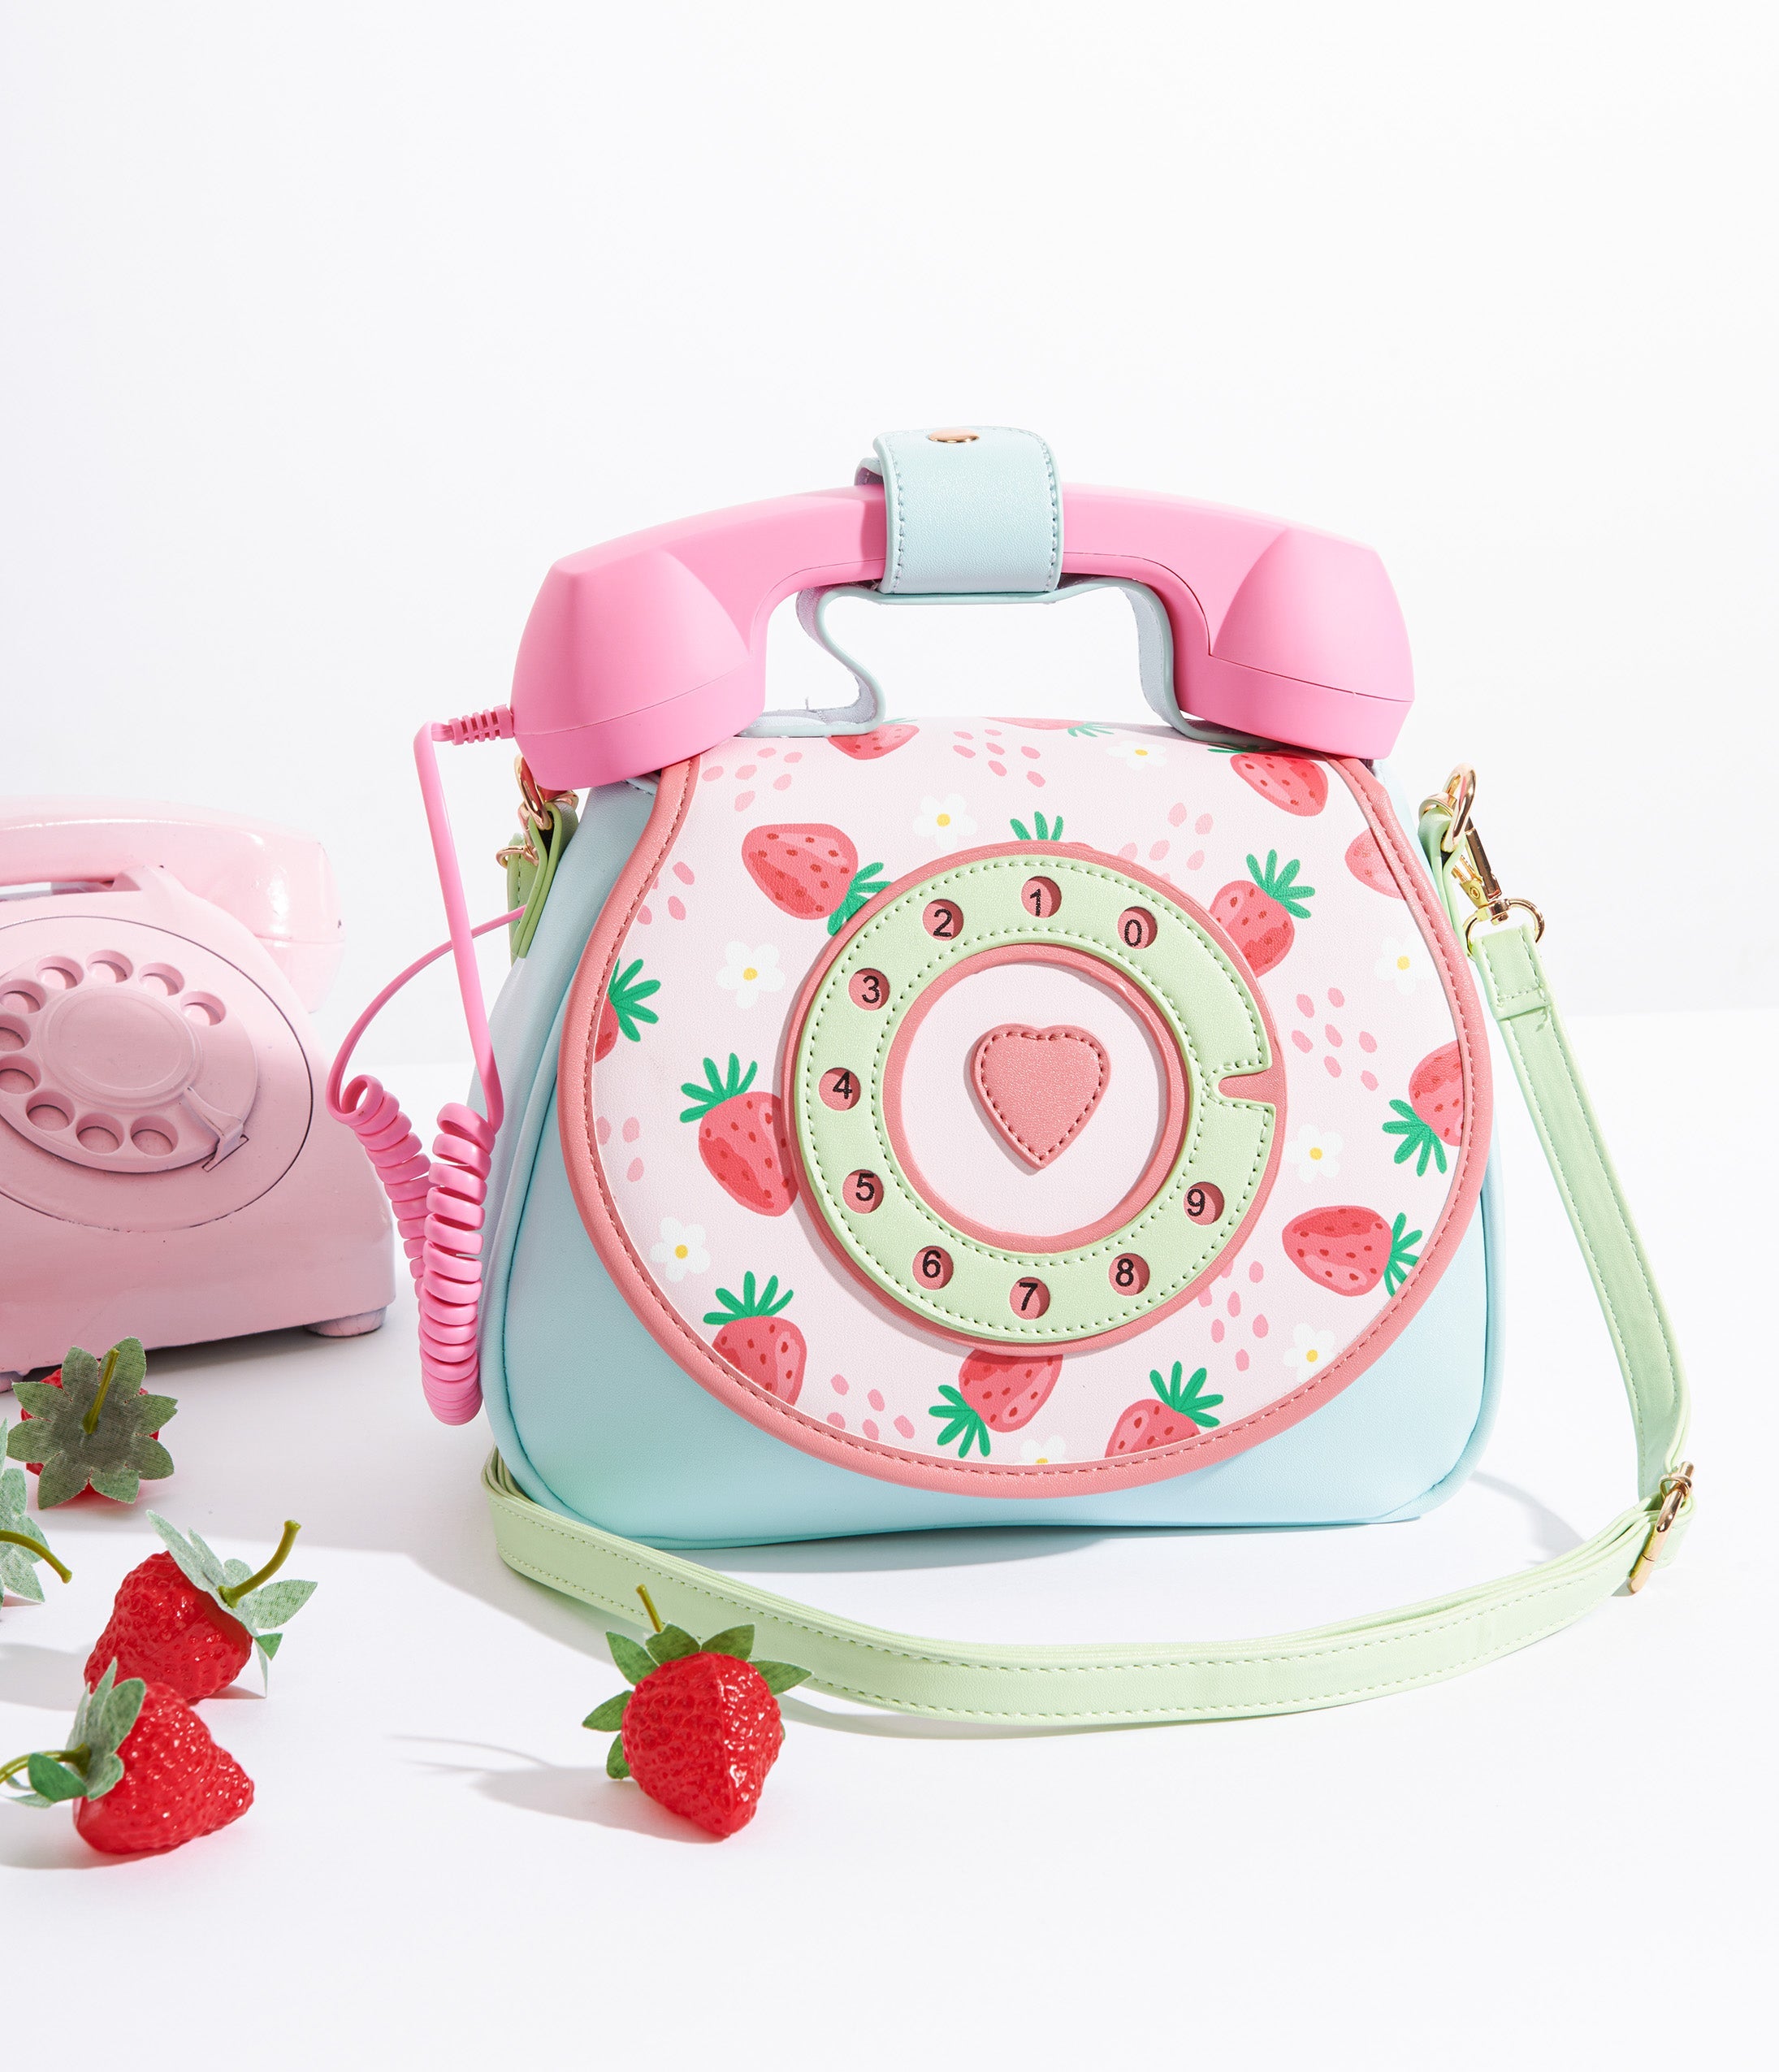 

Strawberry Fields Ring Ring Phone Convertible Handbag